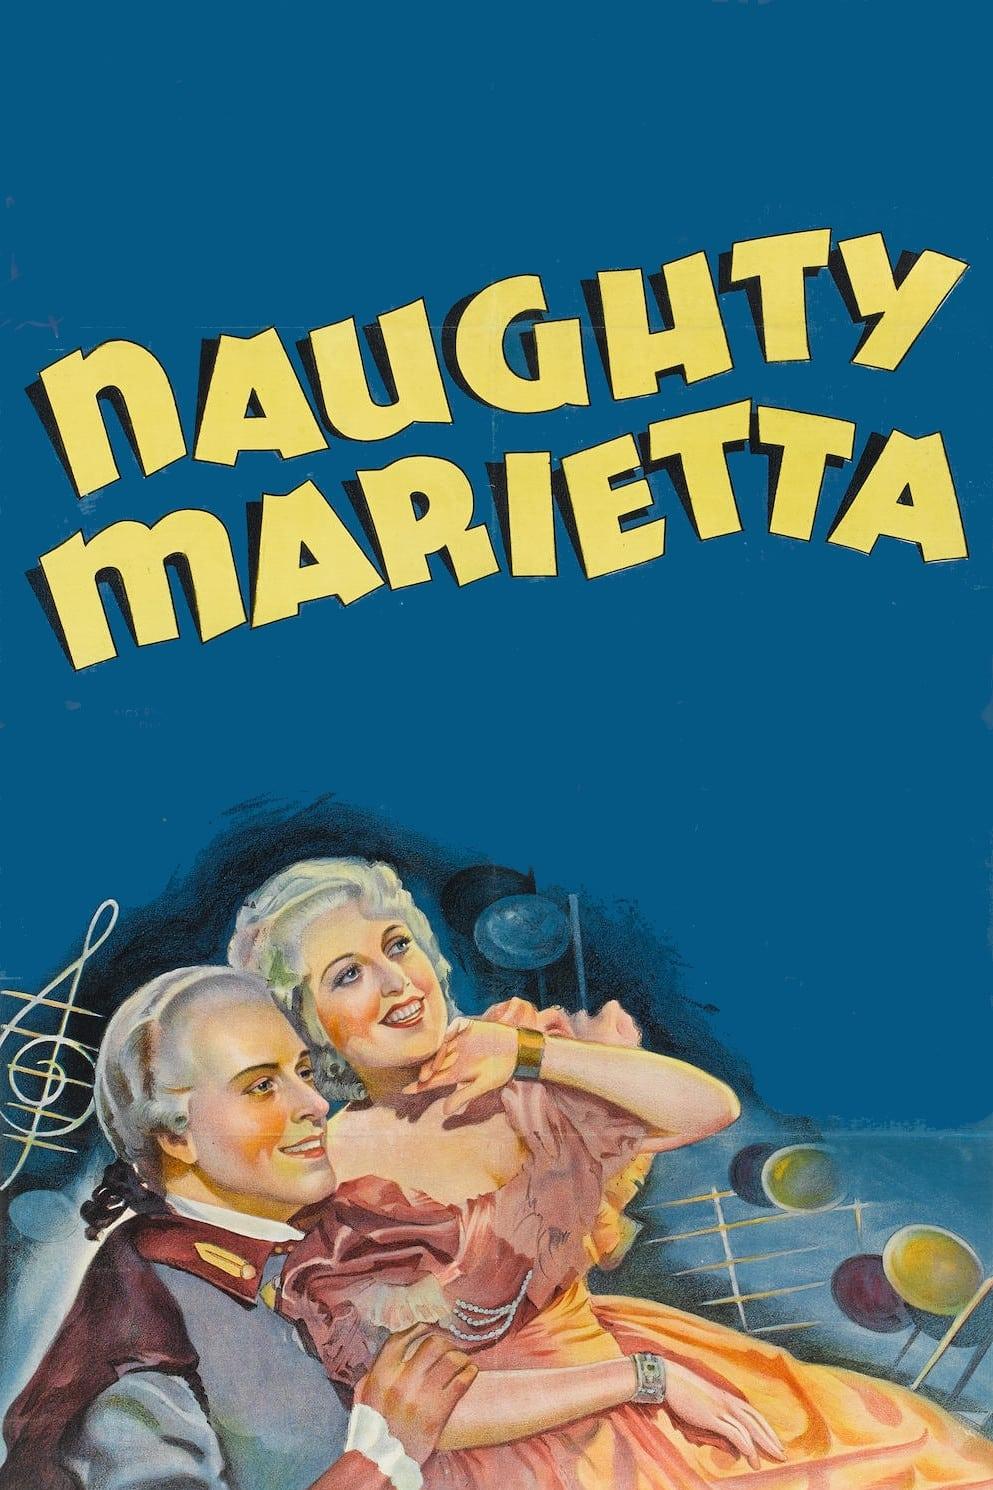 Tolle Marietta poster